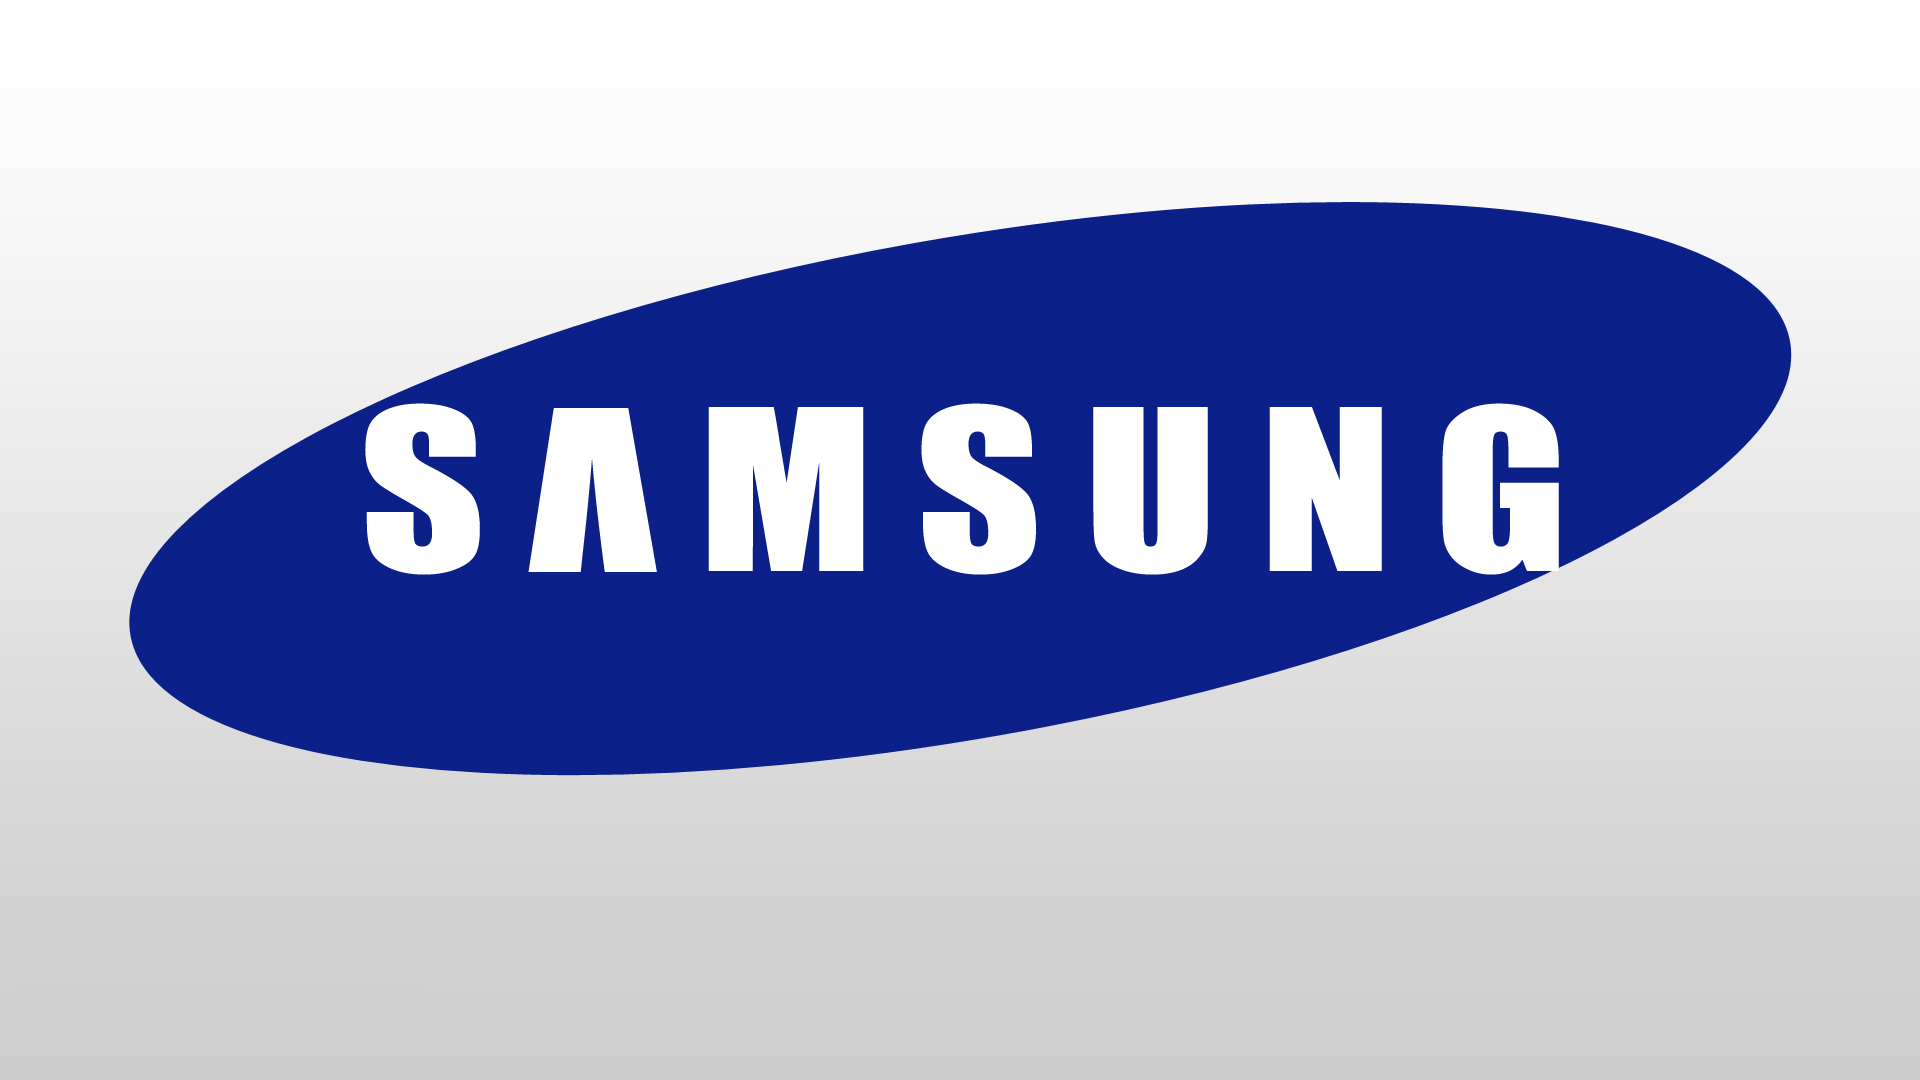 Samsung Galaxy Logo Wallpapers - Wallpaper Cave